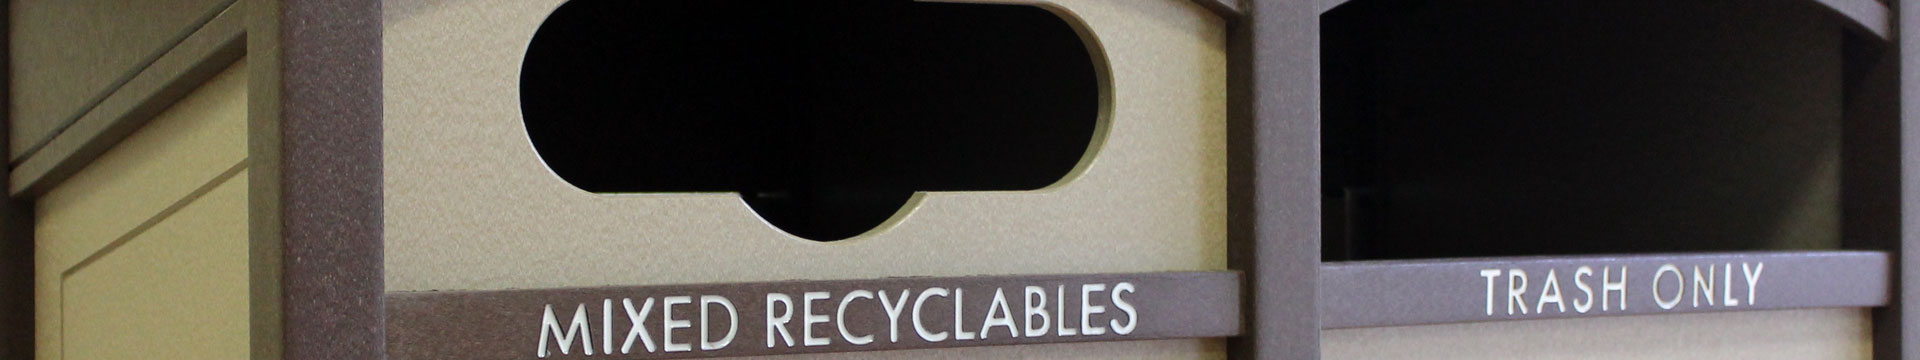 custom recycling bins